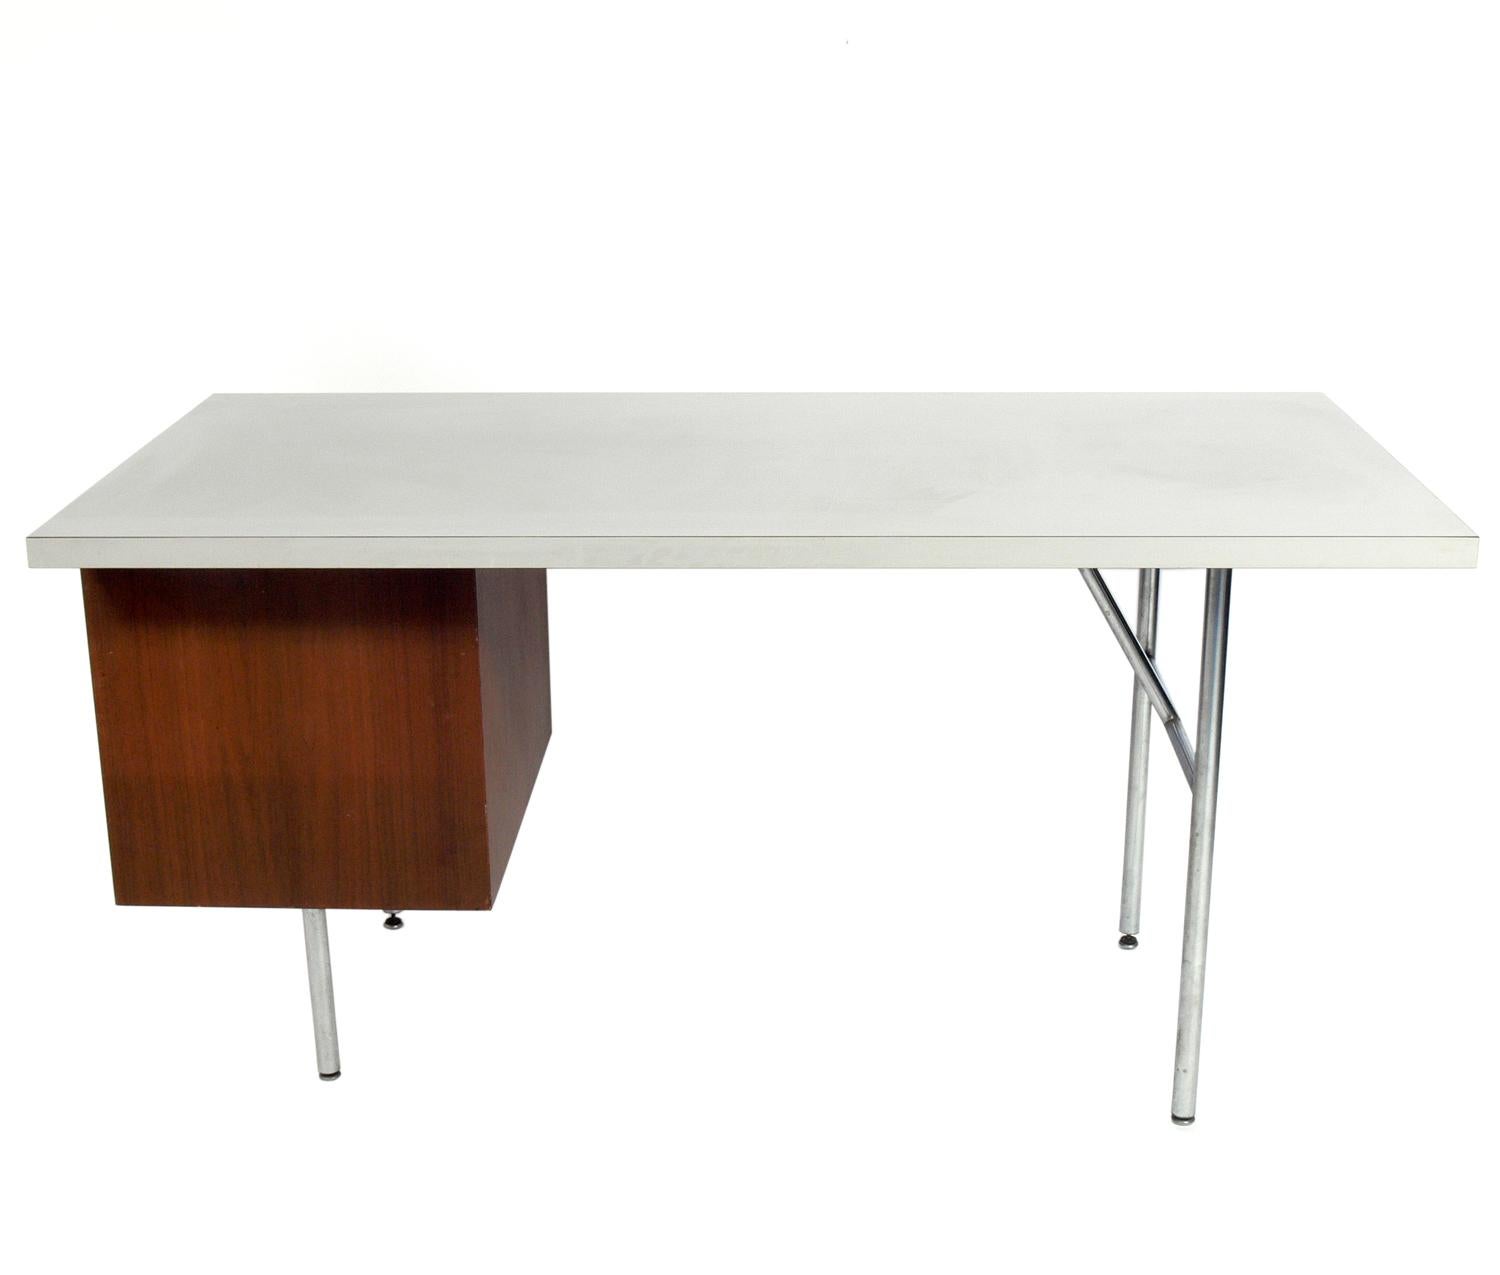 Mid-20th Century Modern Desk Designed by George Nelson for Herman Miller